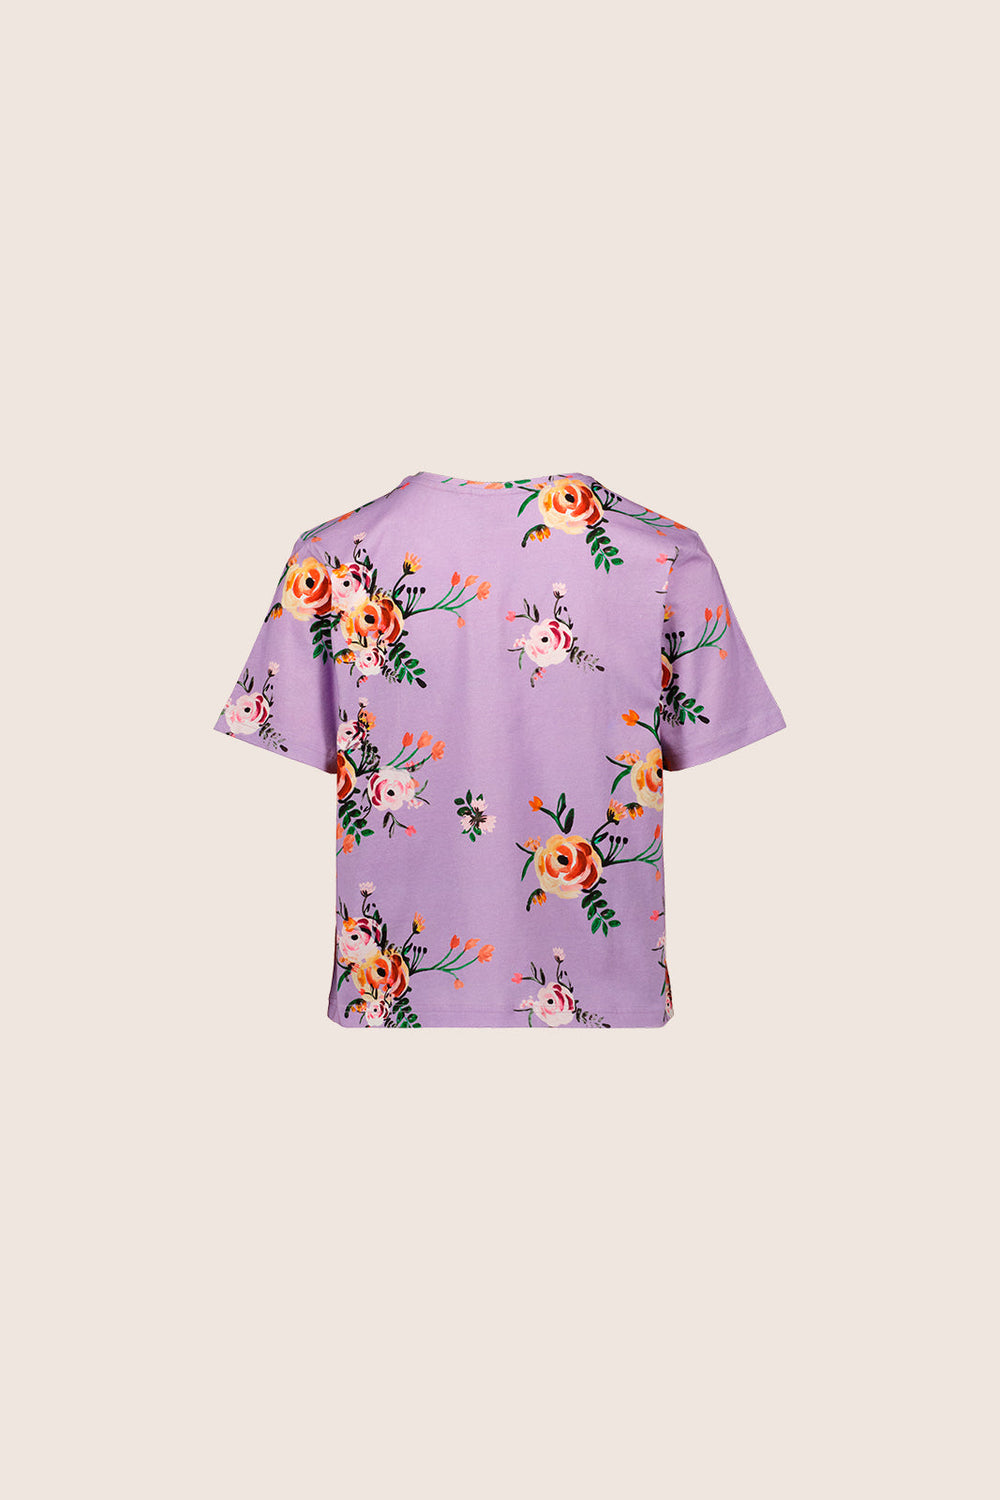 KAIKO - T-Shirt - Lavender Bloom 5